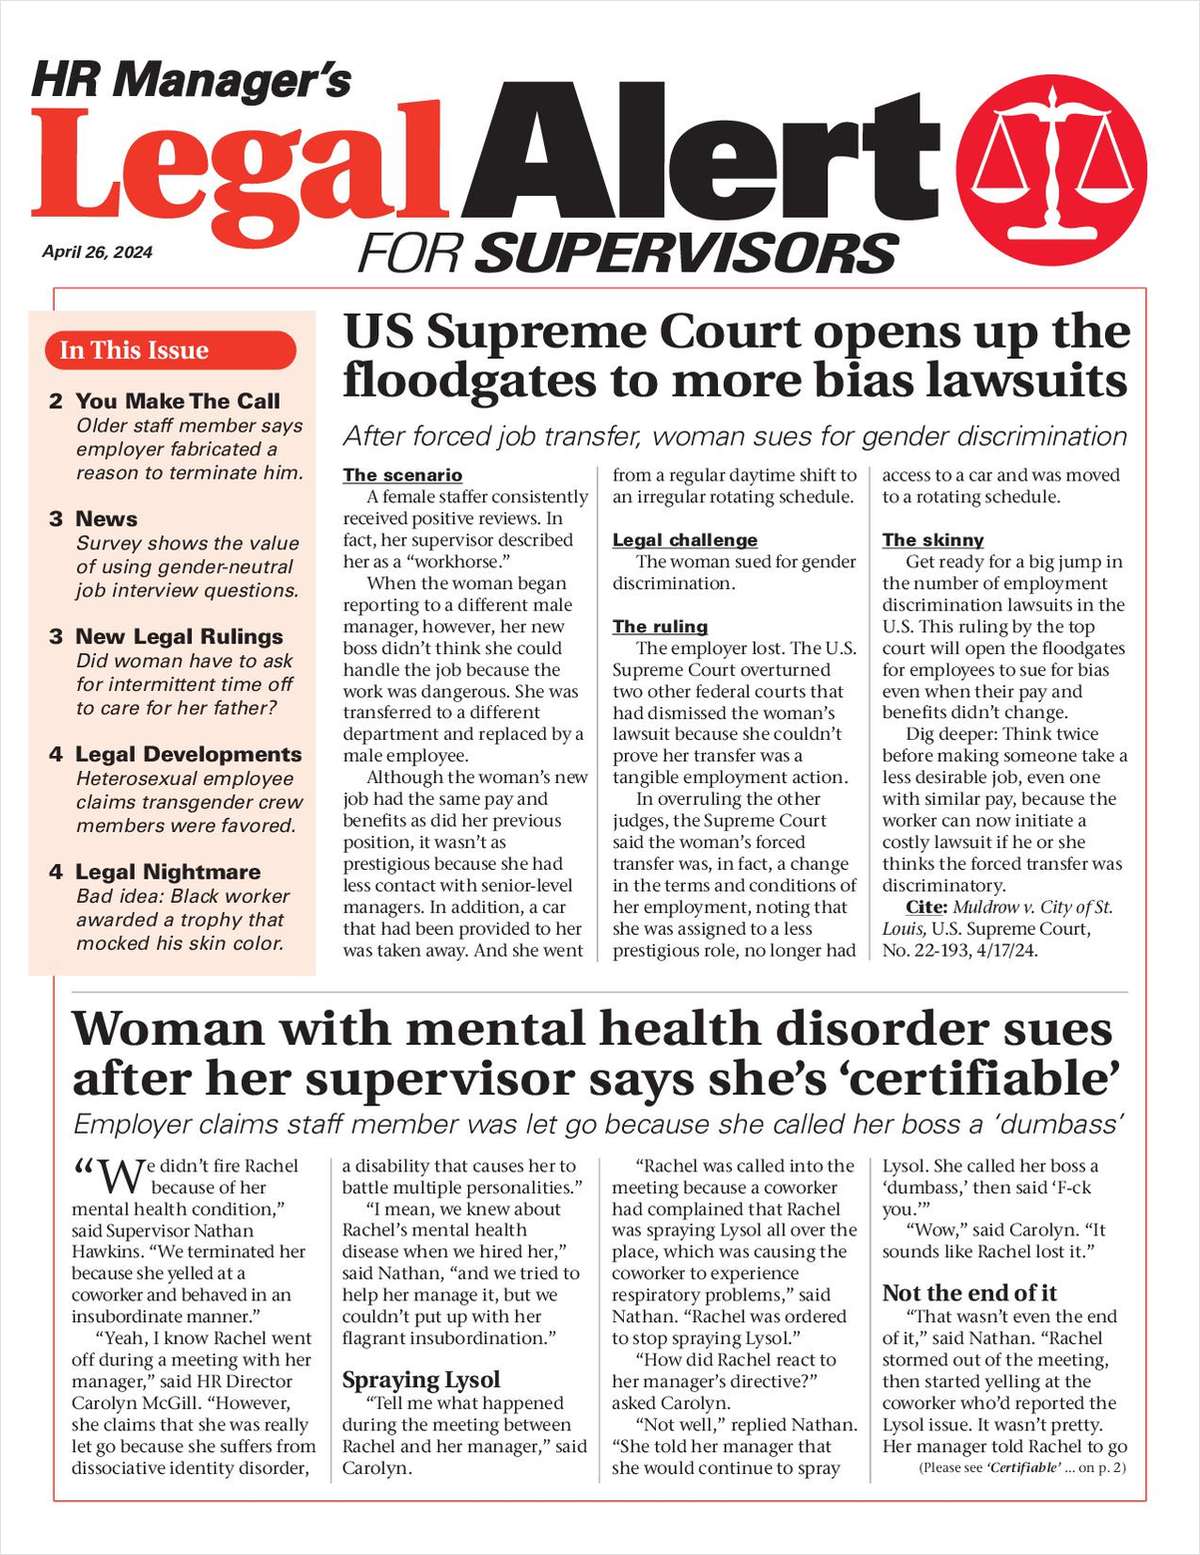 HR Manager's Legal Alert for Supervisors Newsletter: April 26 Edition